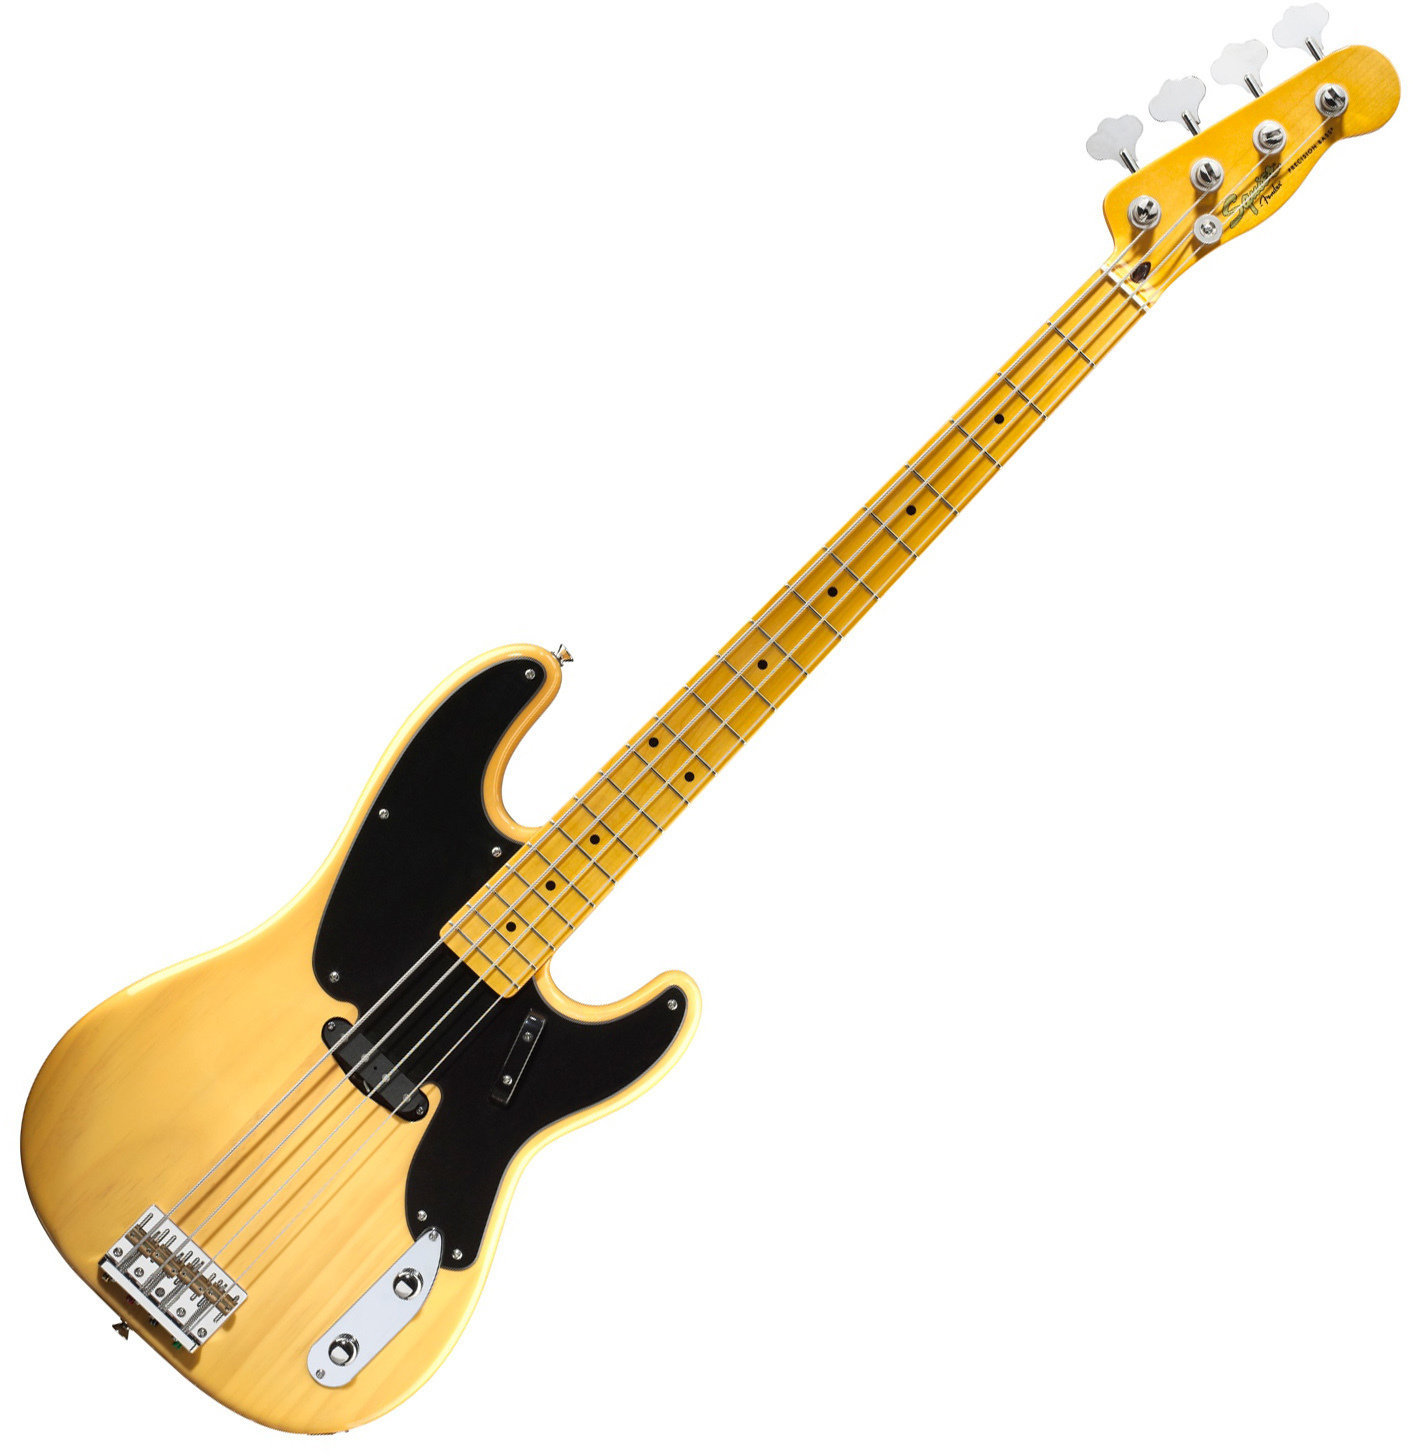 Bass 50. Squier Classic Vibe Precision. Squier Precision Bass Classic Vibe. Fender Classic Vibe. Fender Precision Bass Classic Vibe.